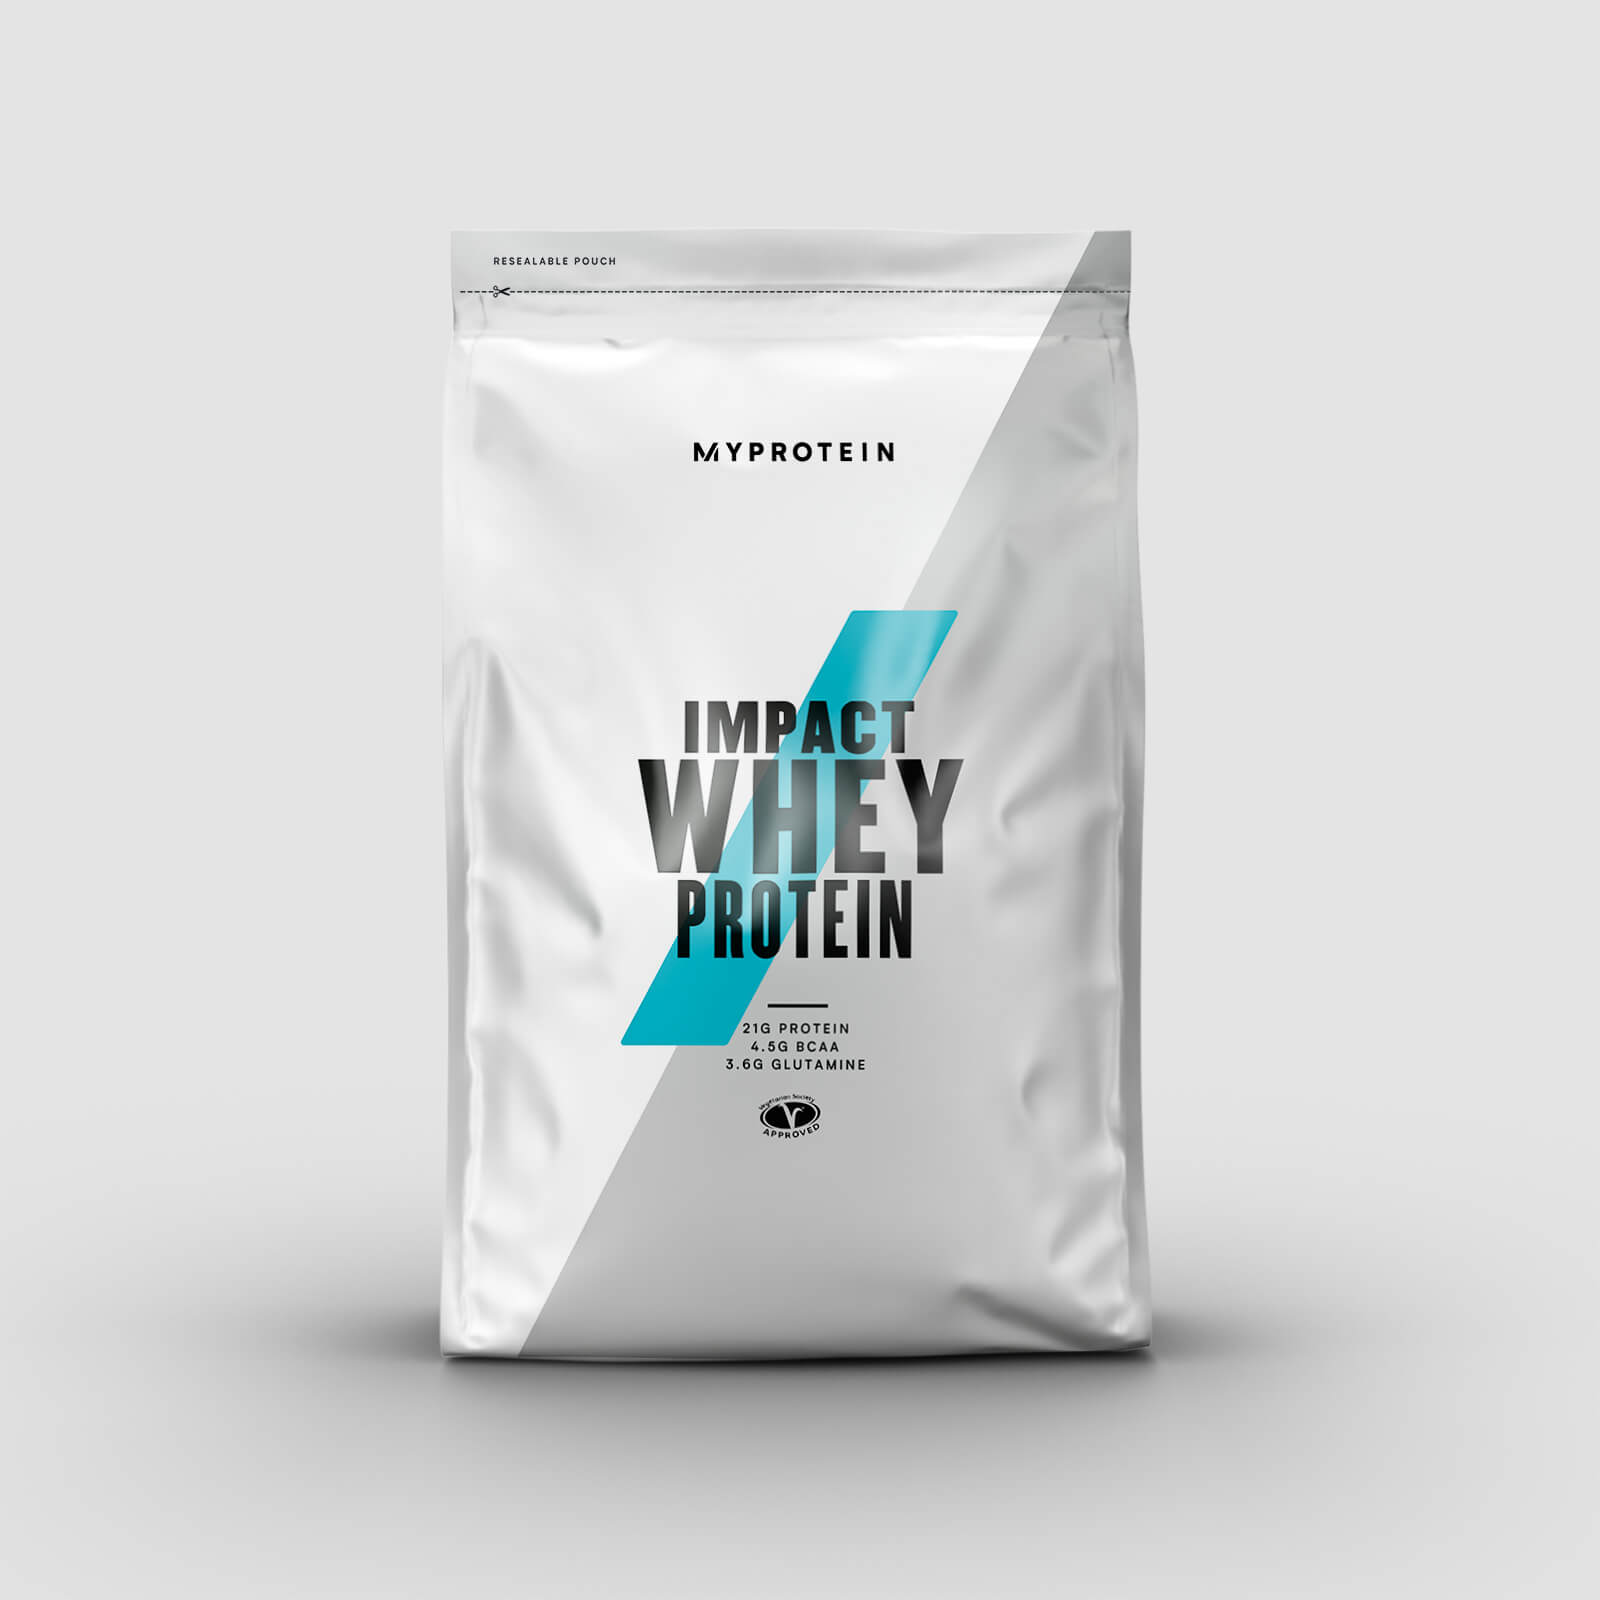 Myprotein Vassleprotein - Impact Whey Protein - 2.5kg - Ny - Chocolate Mint Stevia